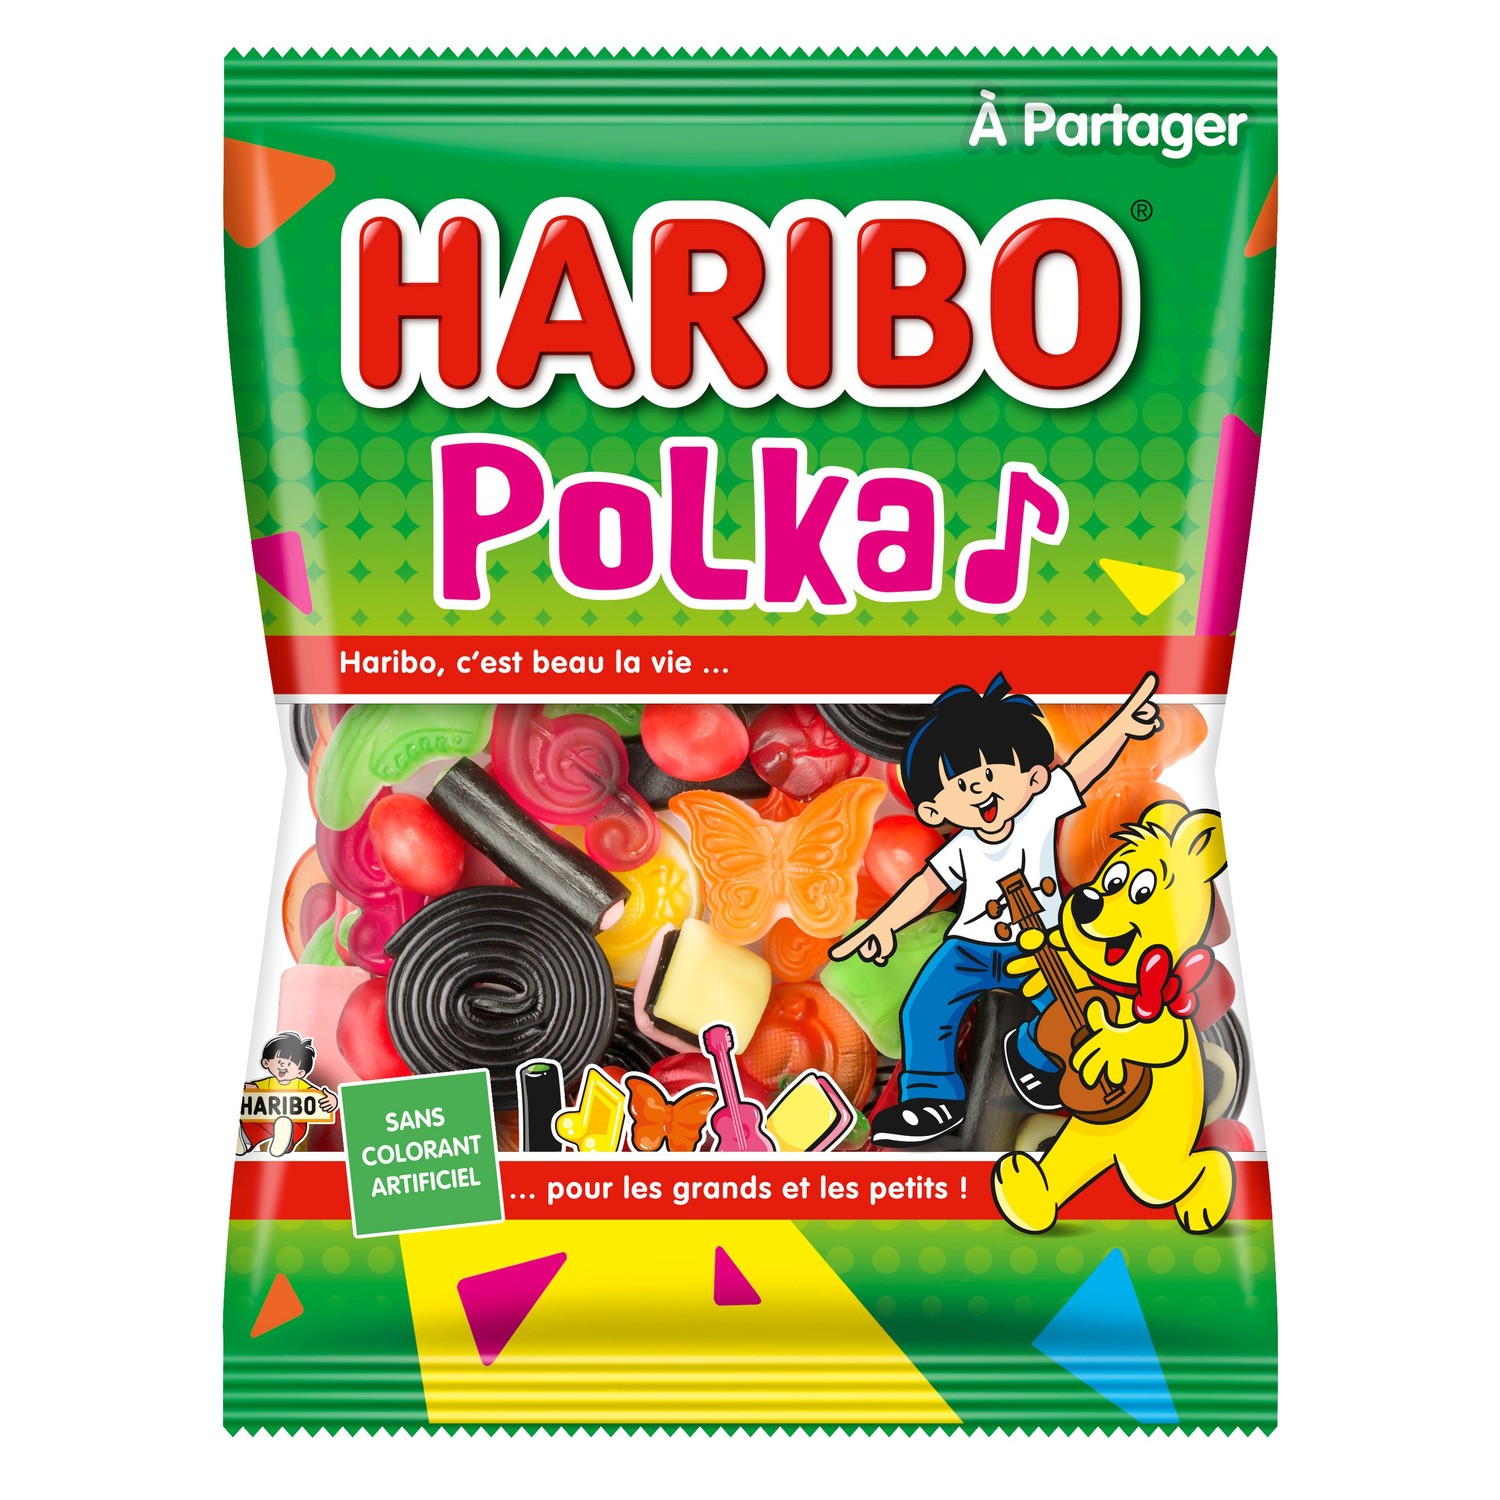 Original Haribo Polka, Buy Online